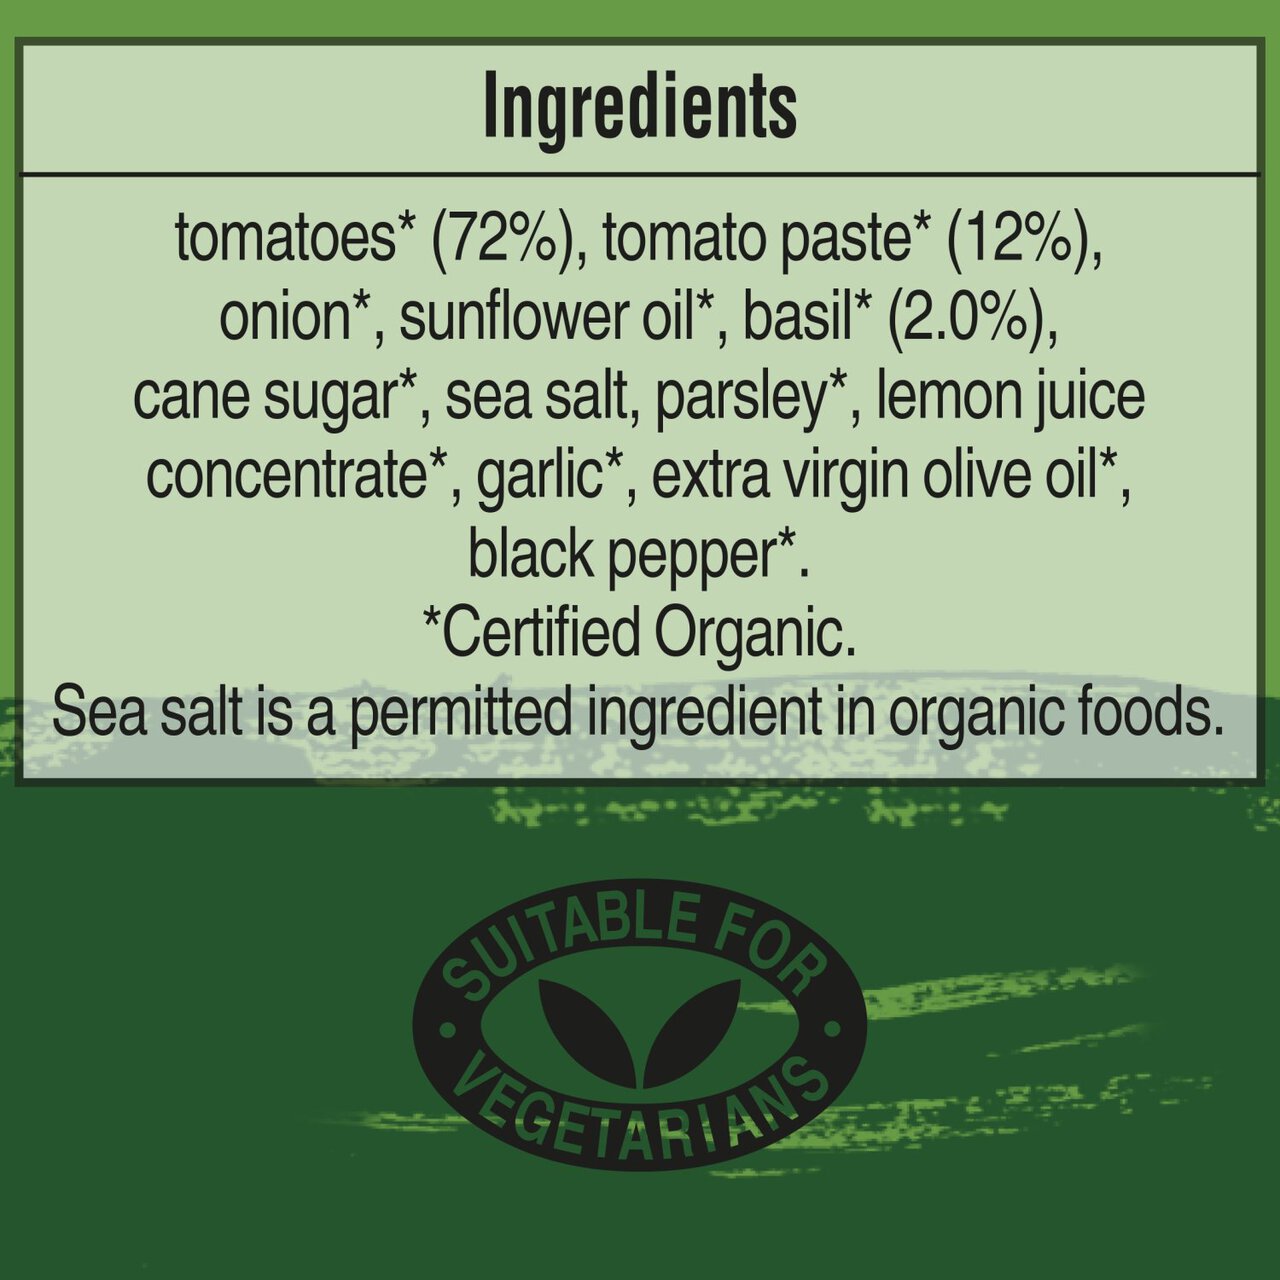 Seeds Of Change Tomato & Basil Organic Pasta Sauce 500g